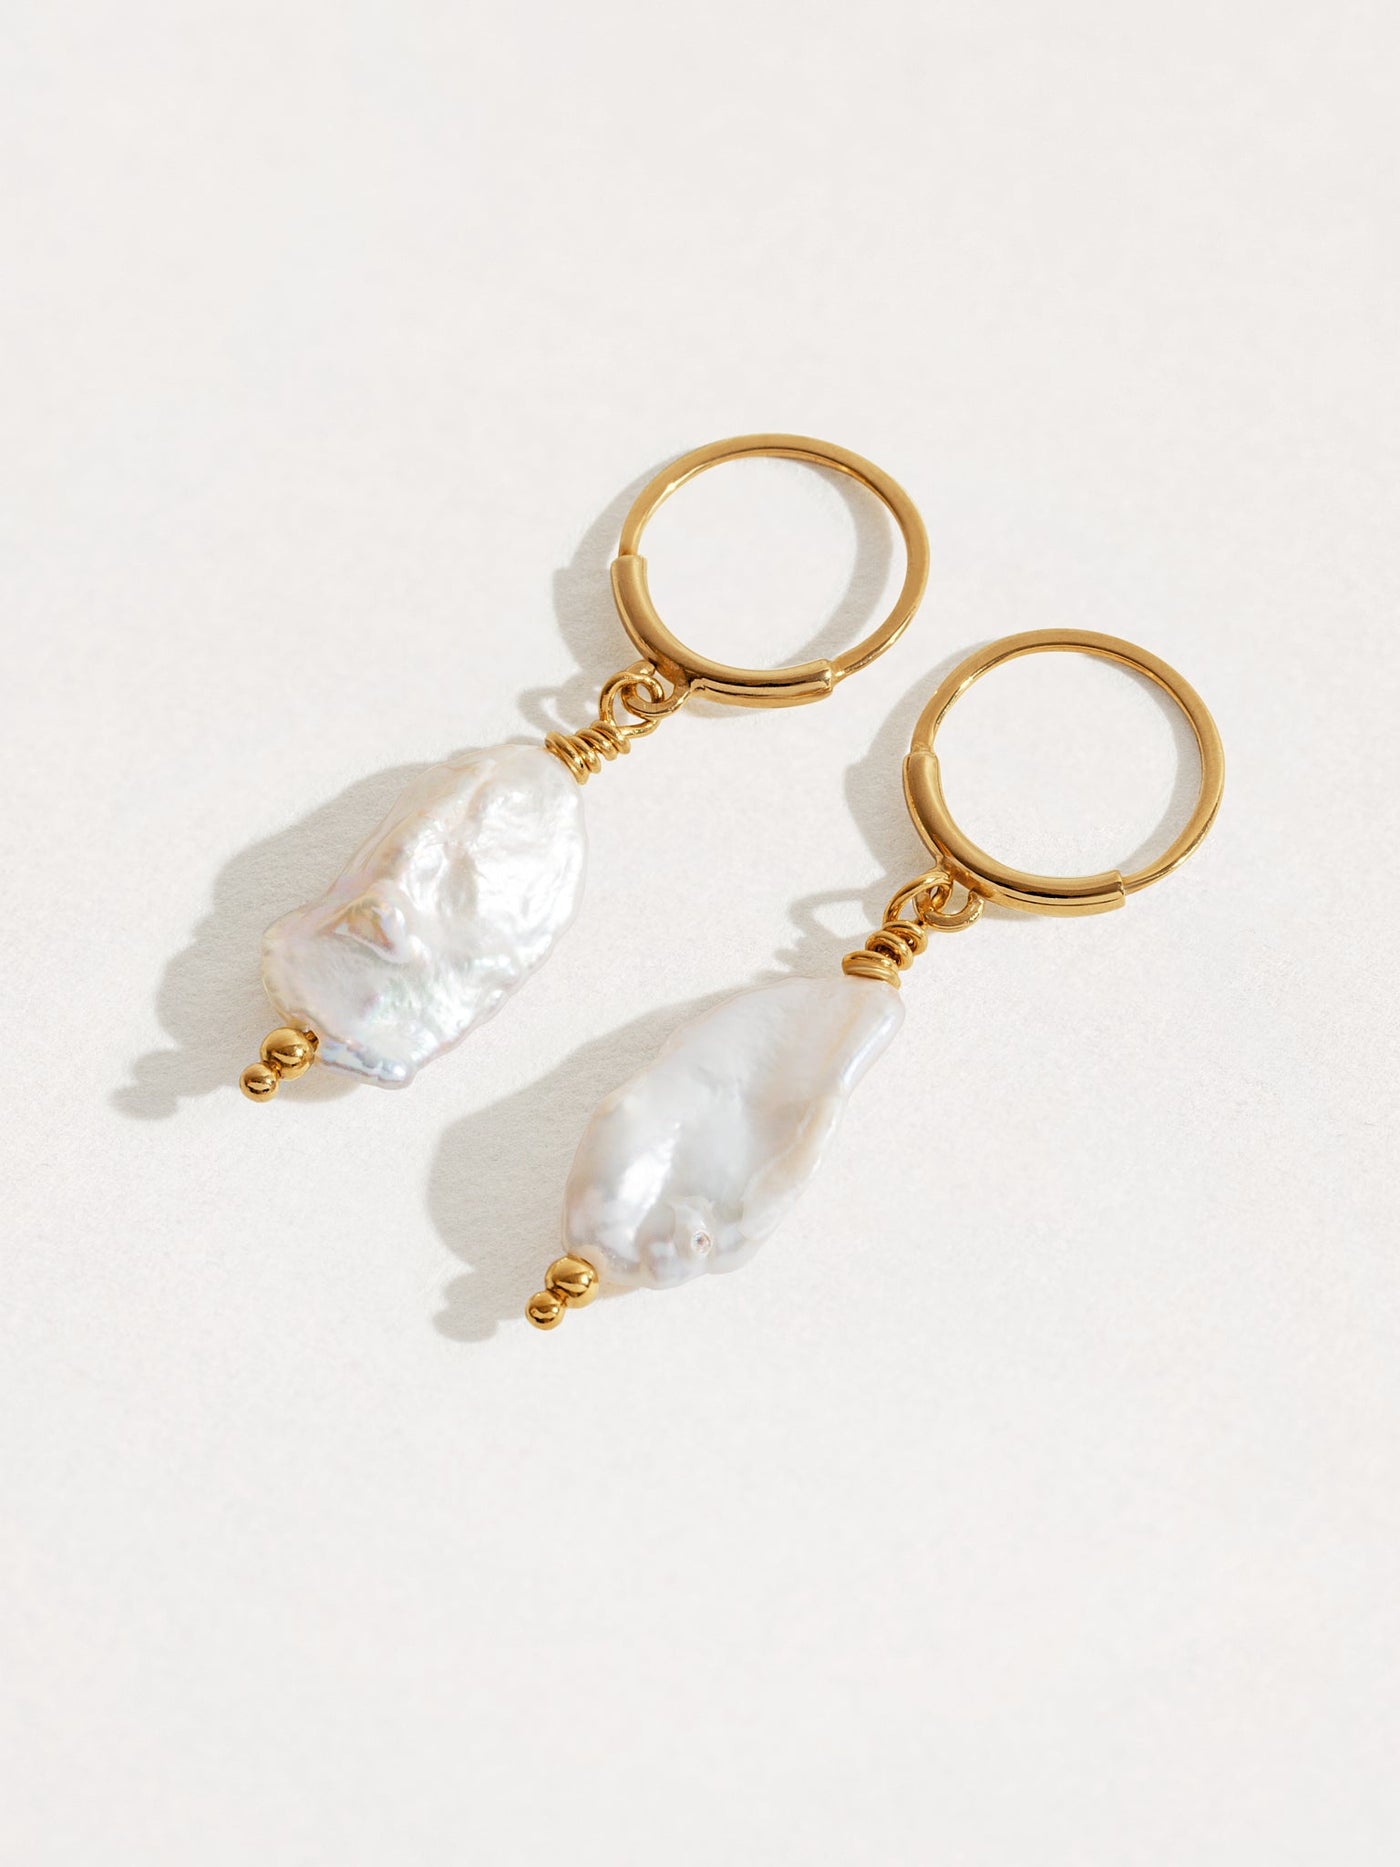 Nadi Gold Filled Hoops with Pearls - 24K Gold PlatedSingleankorBrooklyn Jewelry TrendsLunai Jewelry